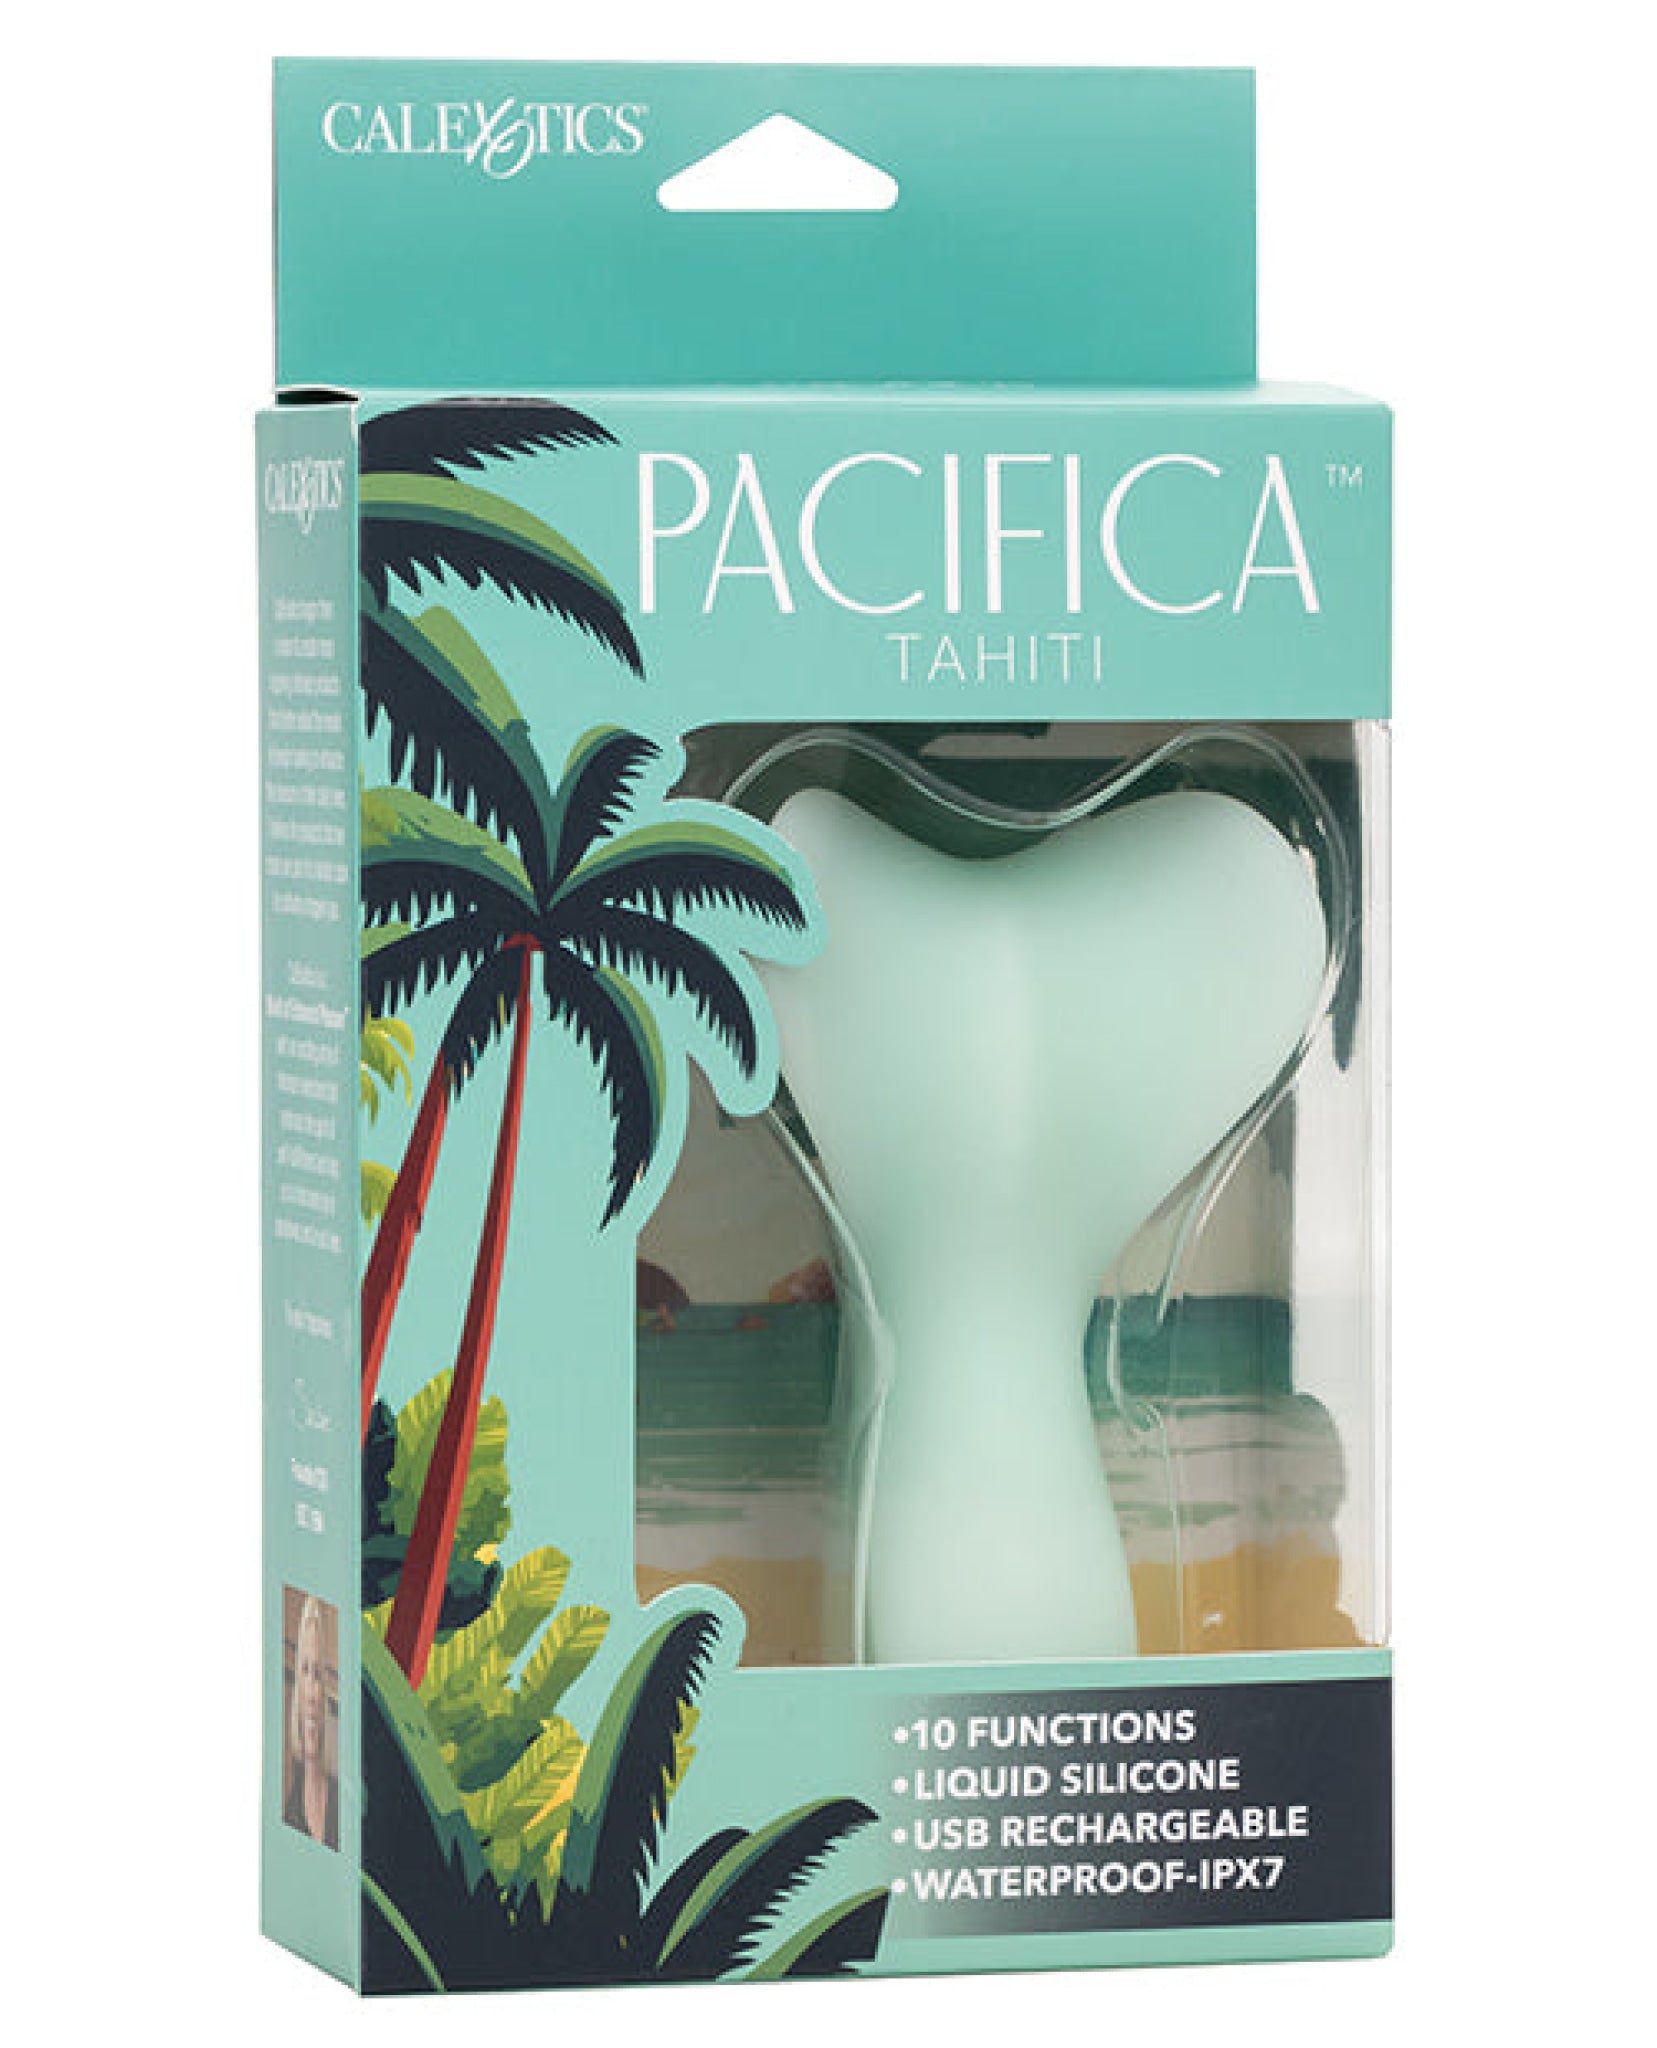 Pacifica Tahiti Stimulator California Exotic Novelties